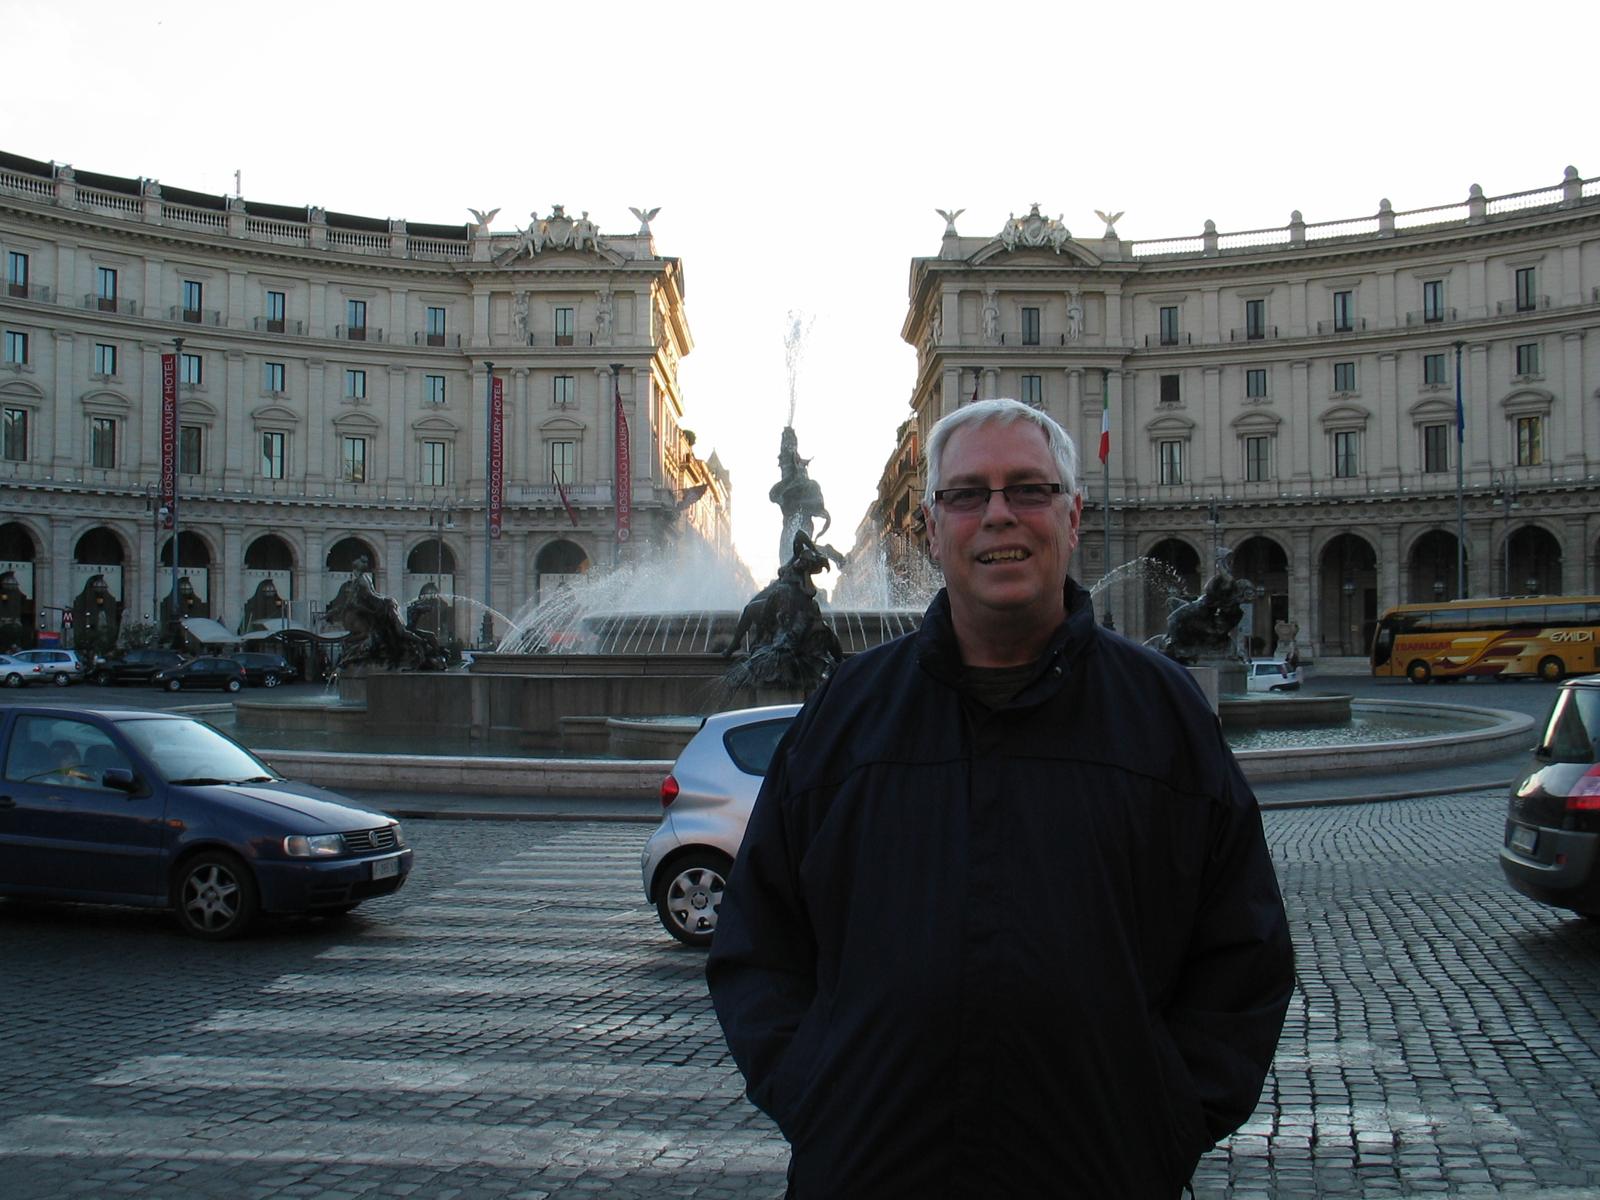 Dad at the Piazza Republica